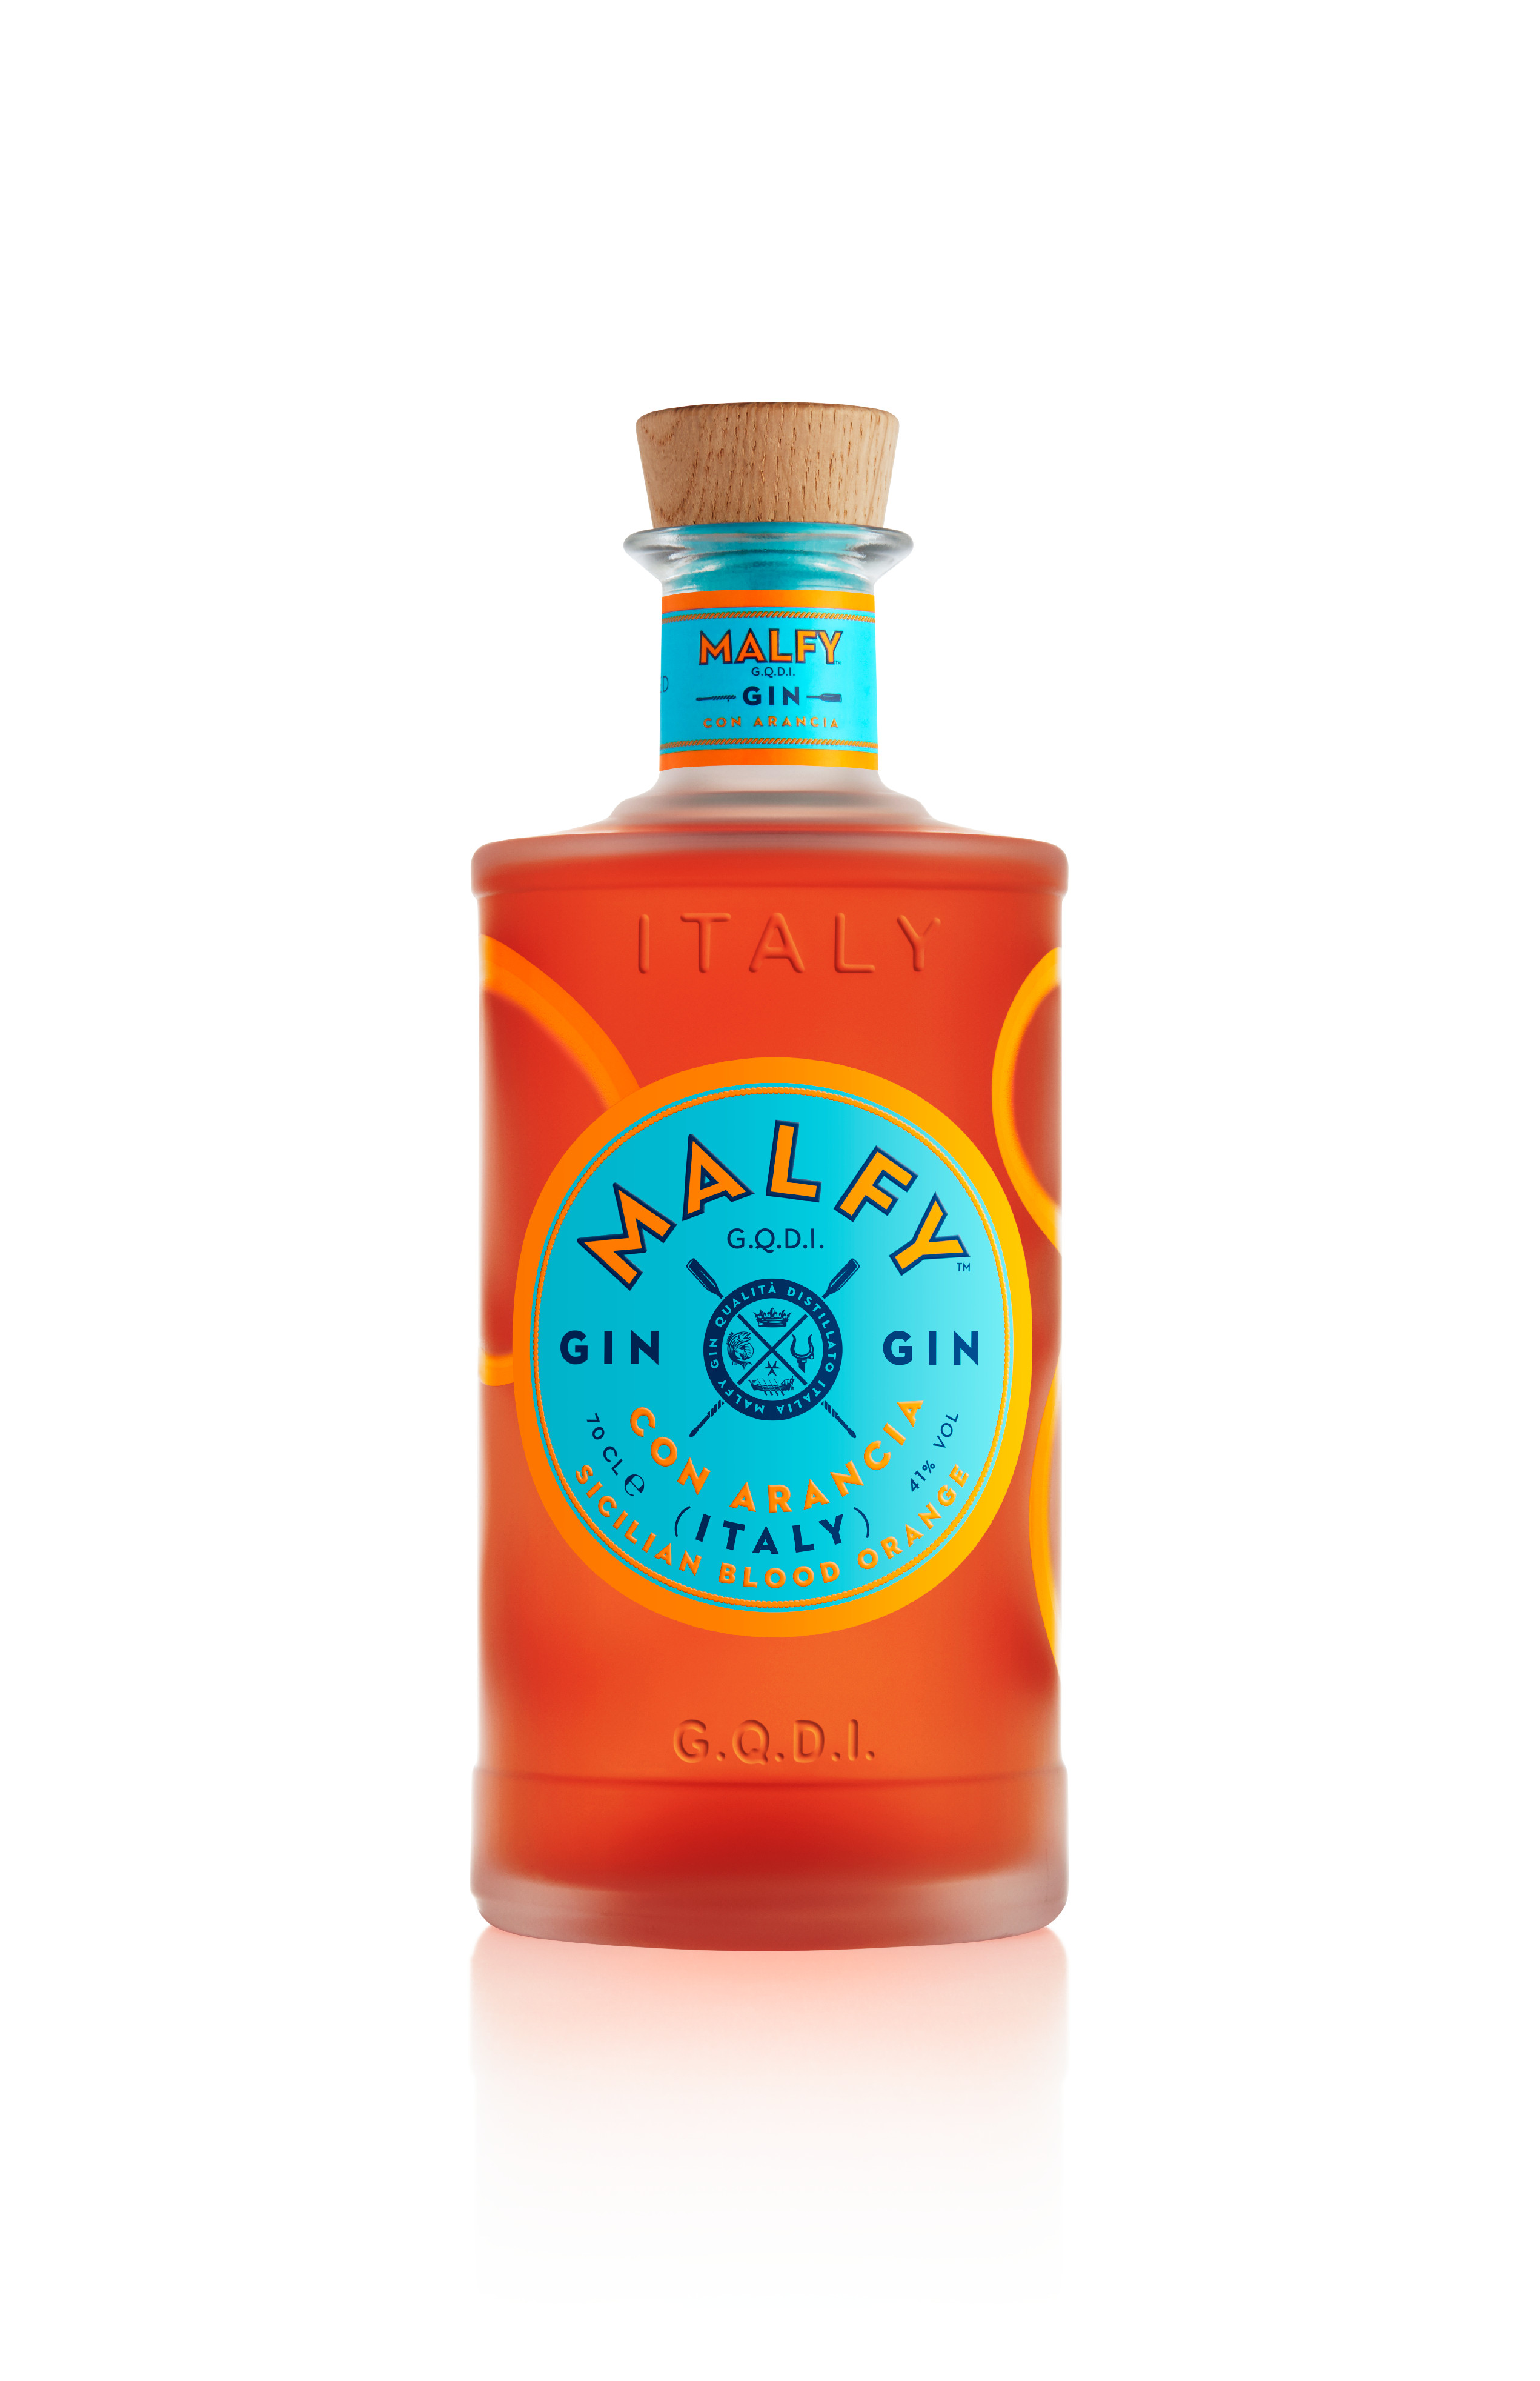 Malfy Gin Arancia (Blood Orange) 41% 0,7L